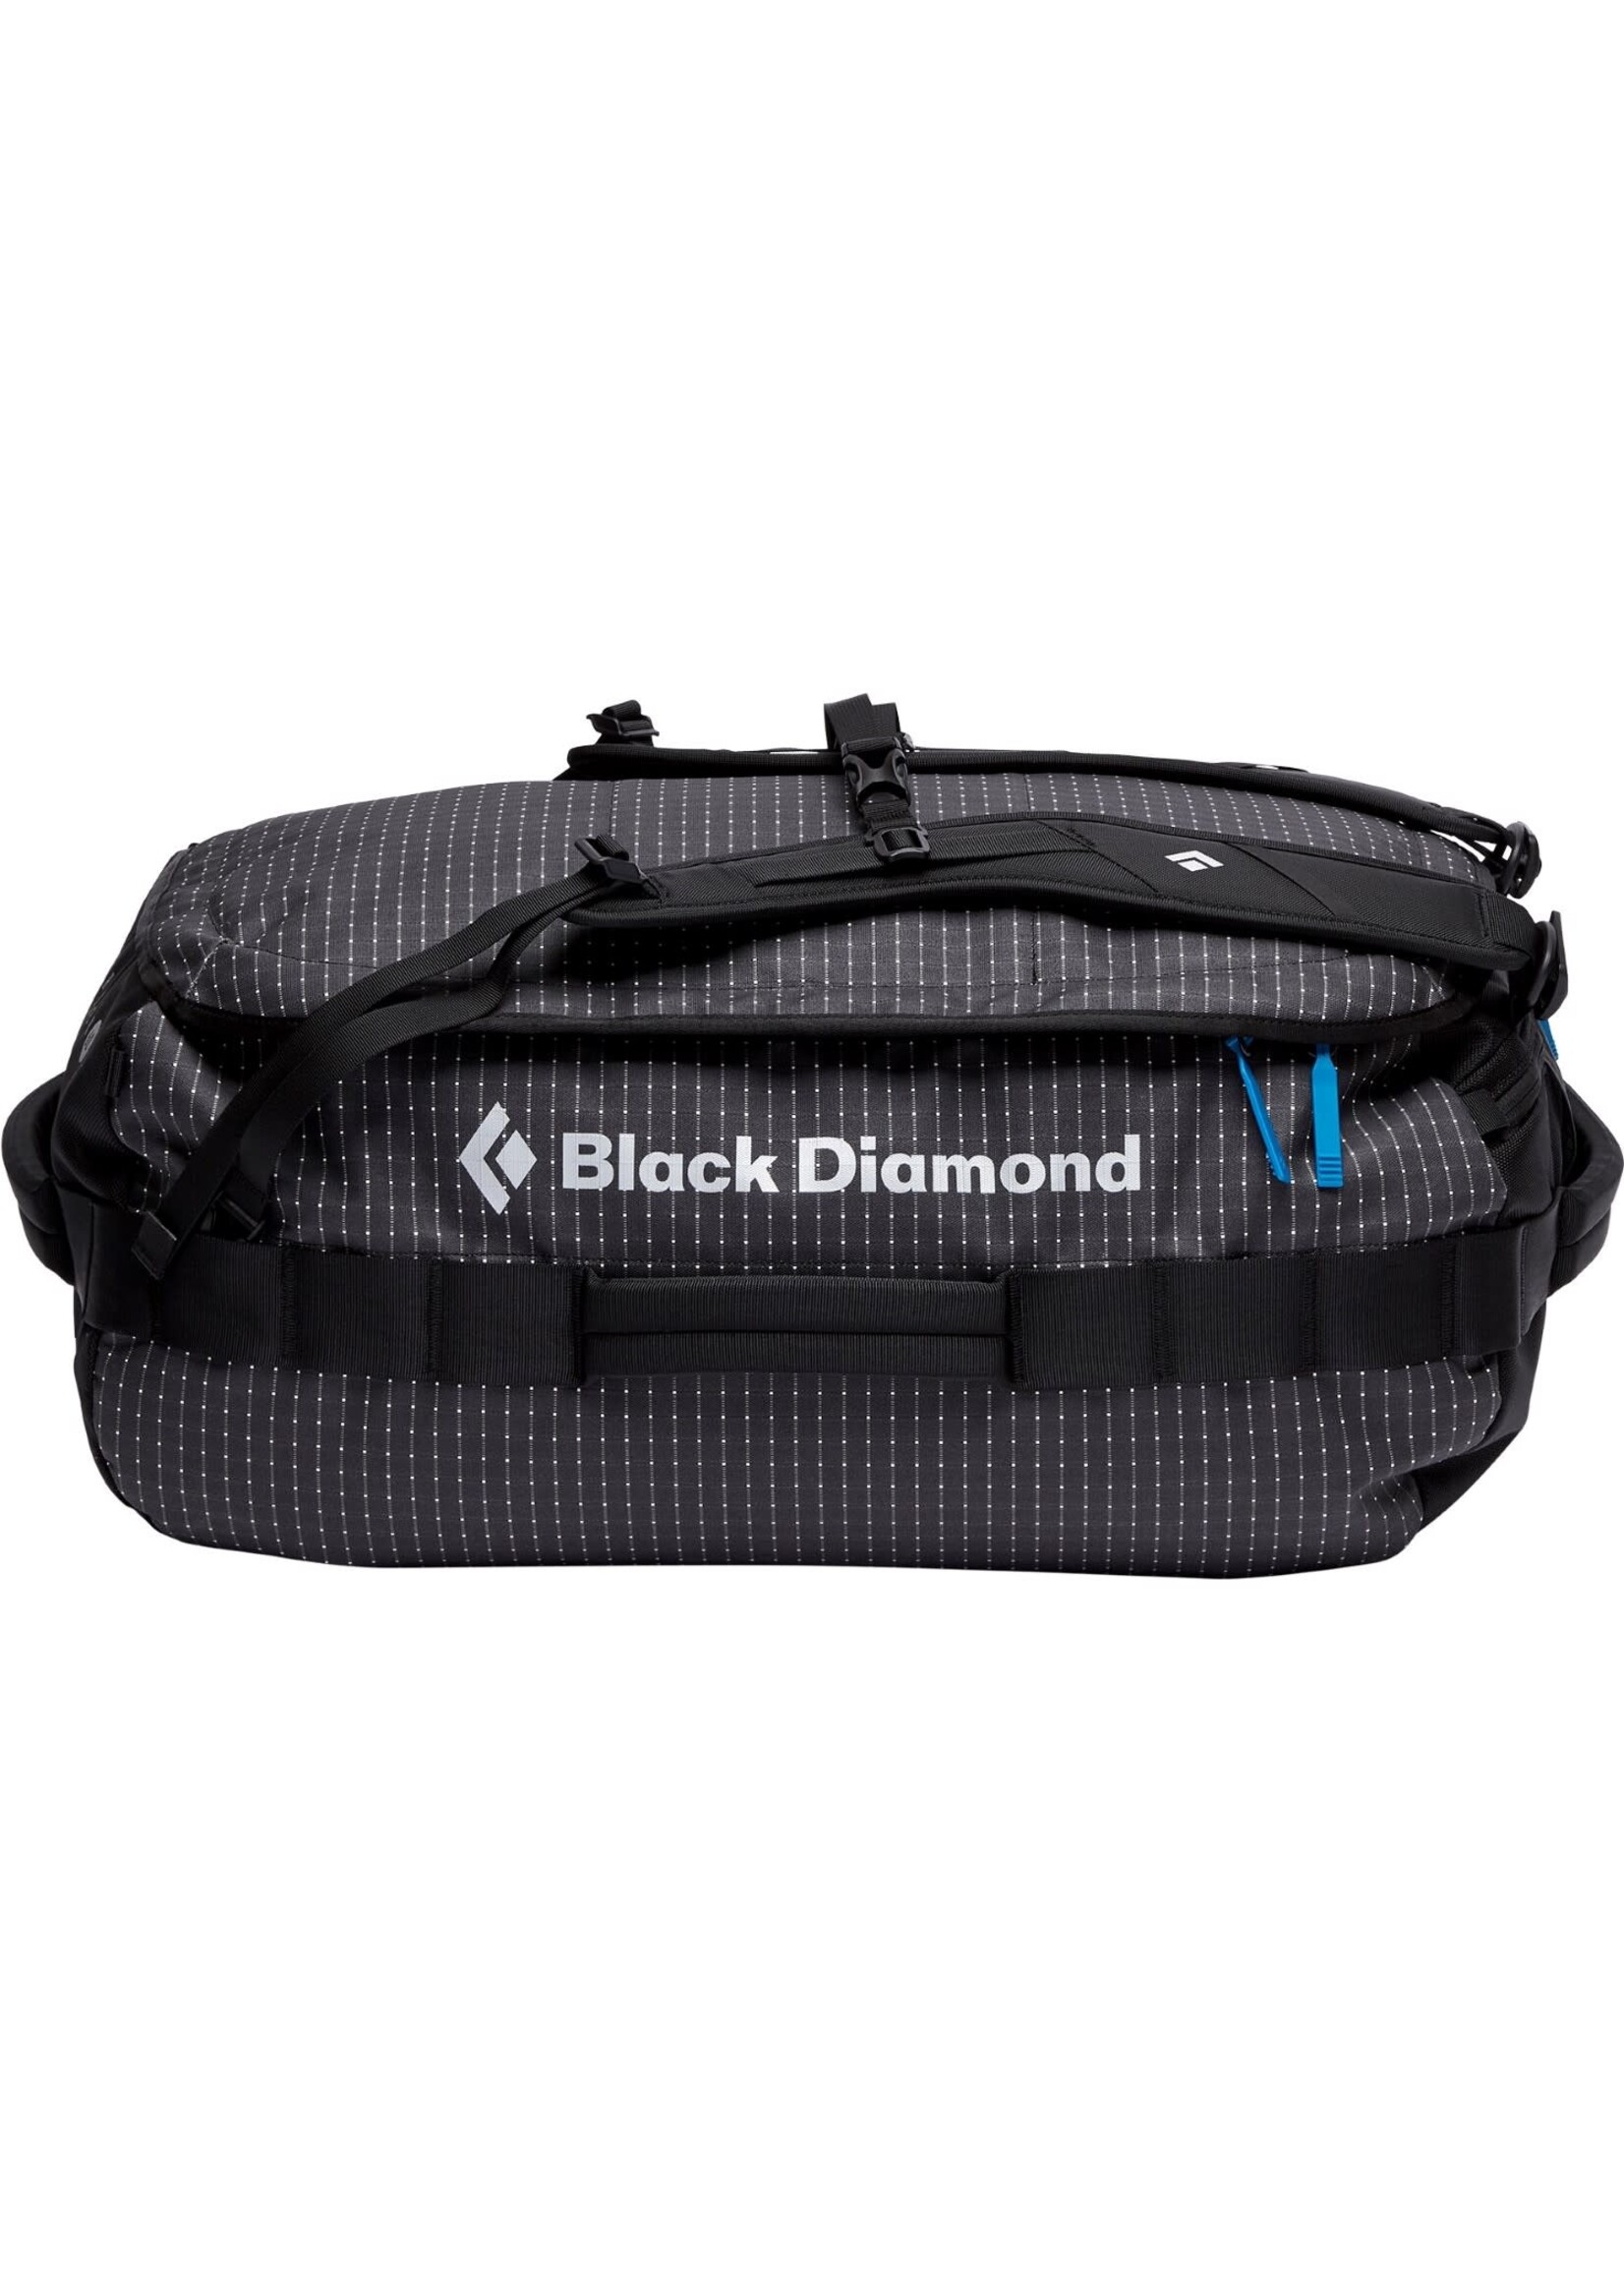 Black Diamond Black Diamond Stonehauler 60L Duffel Bag